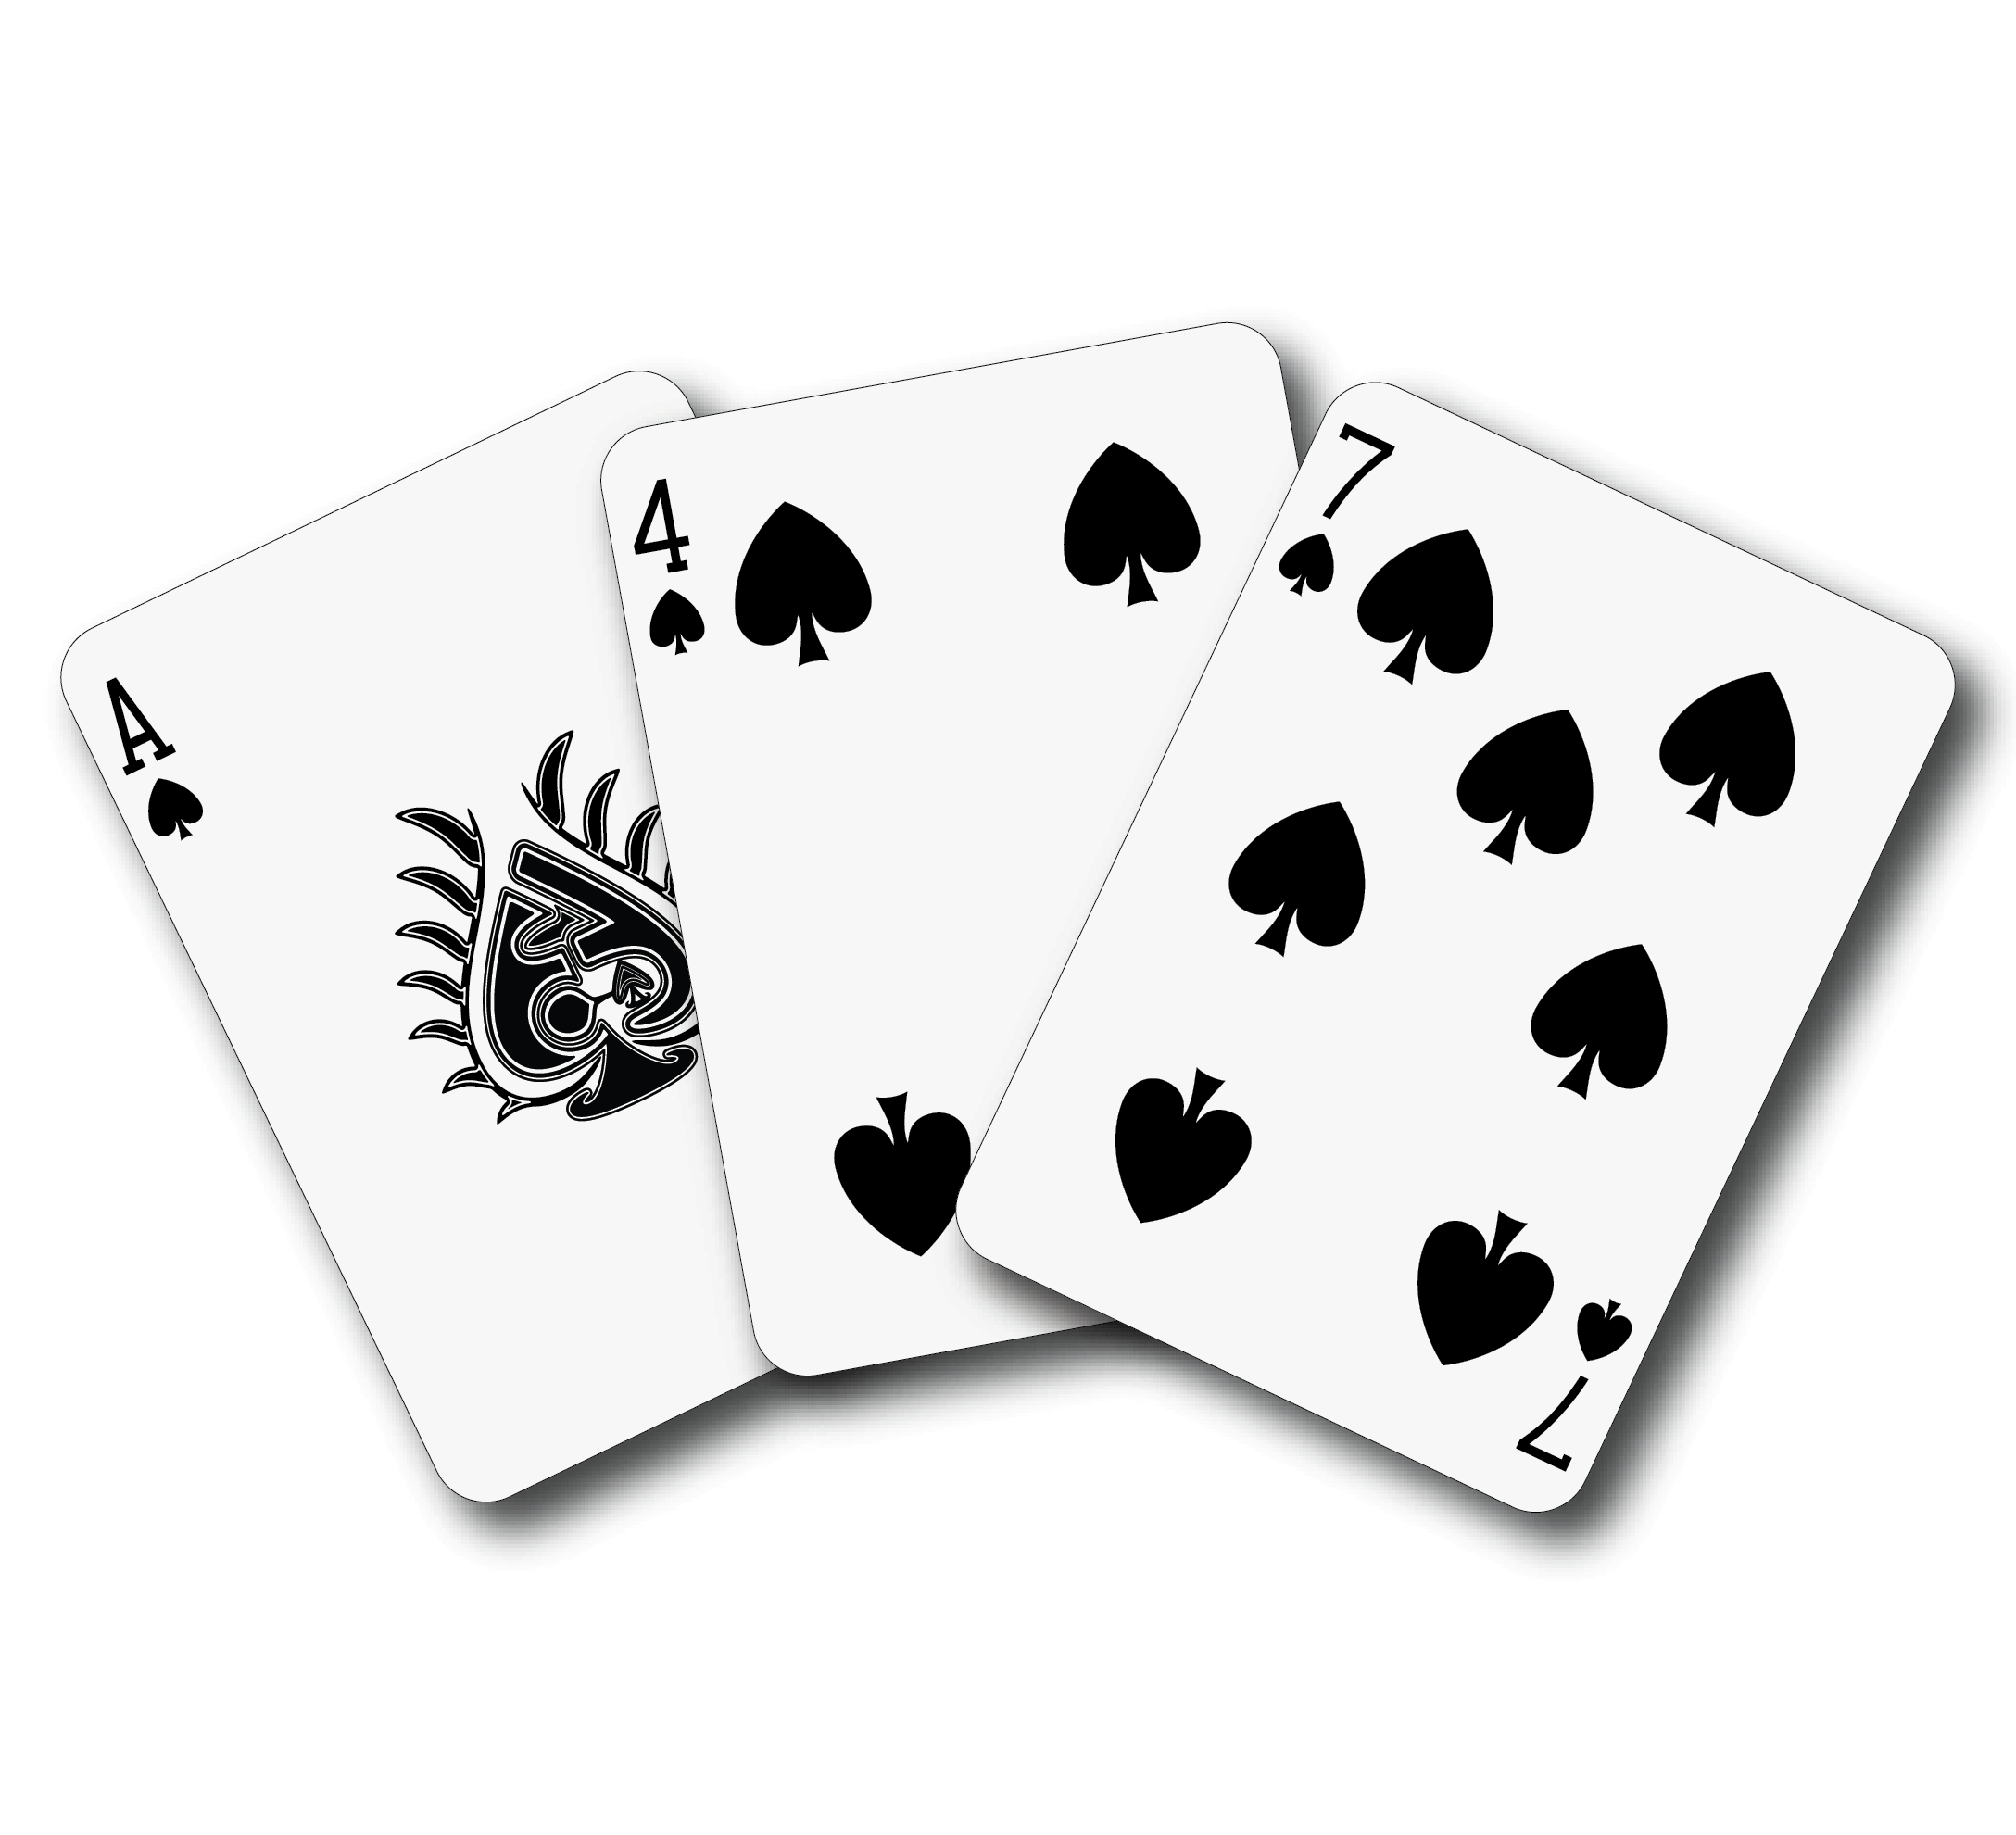 Basic Rules of Poker - Spades